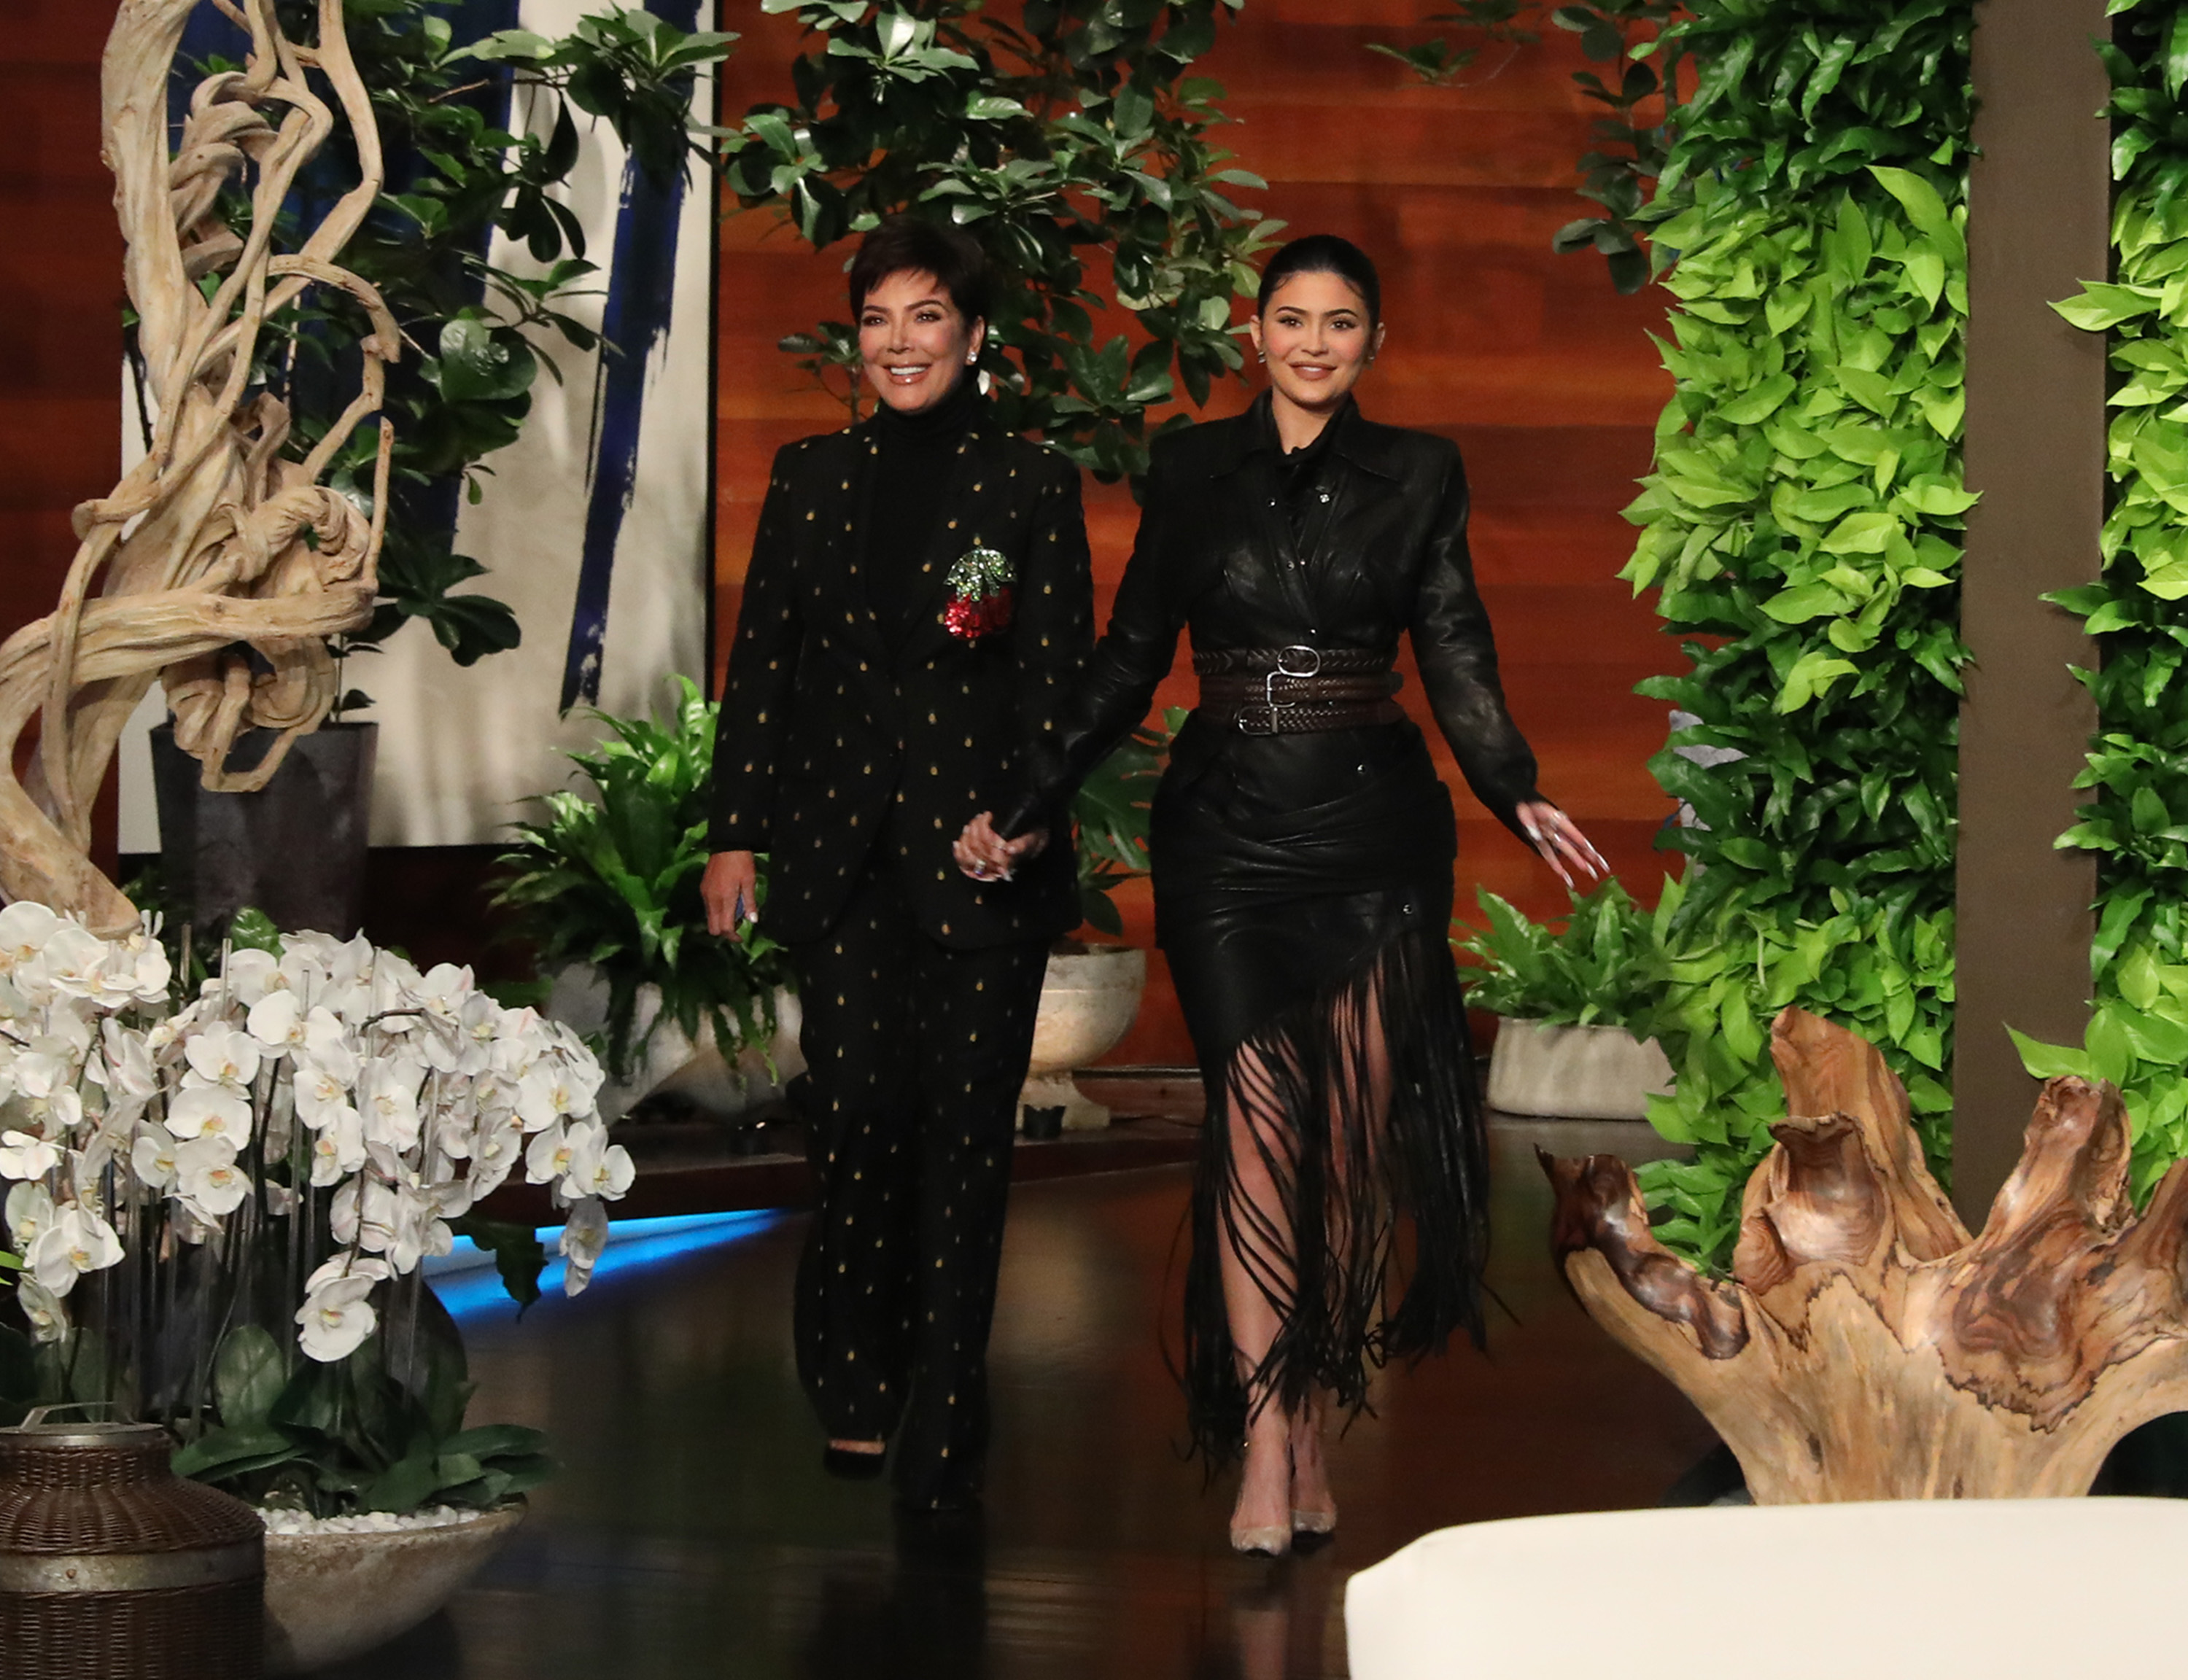 Kylie & Kris Jenner Chat, Reward Women's Group With $750,000 On "Ellen  DeGeneres Show" (Watch Now)